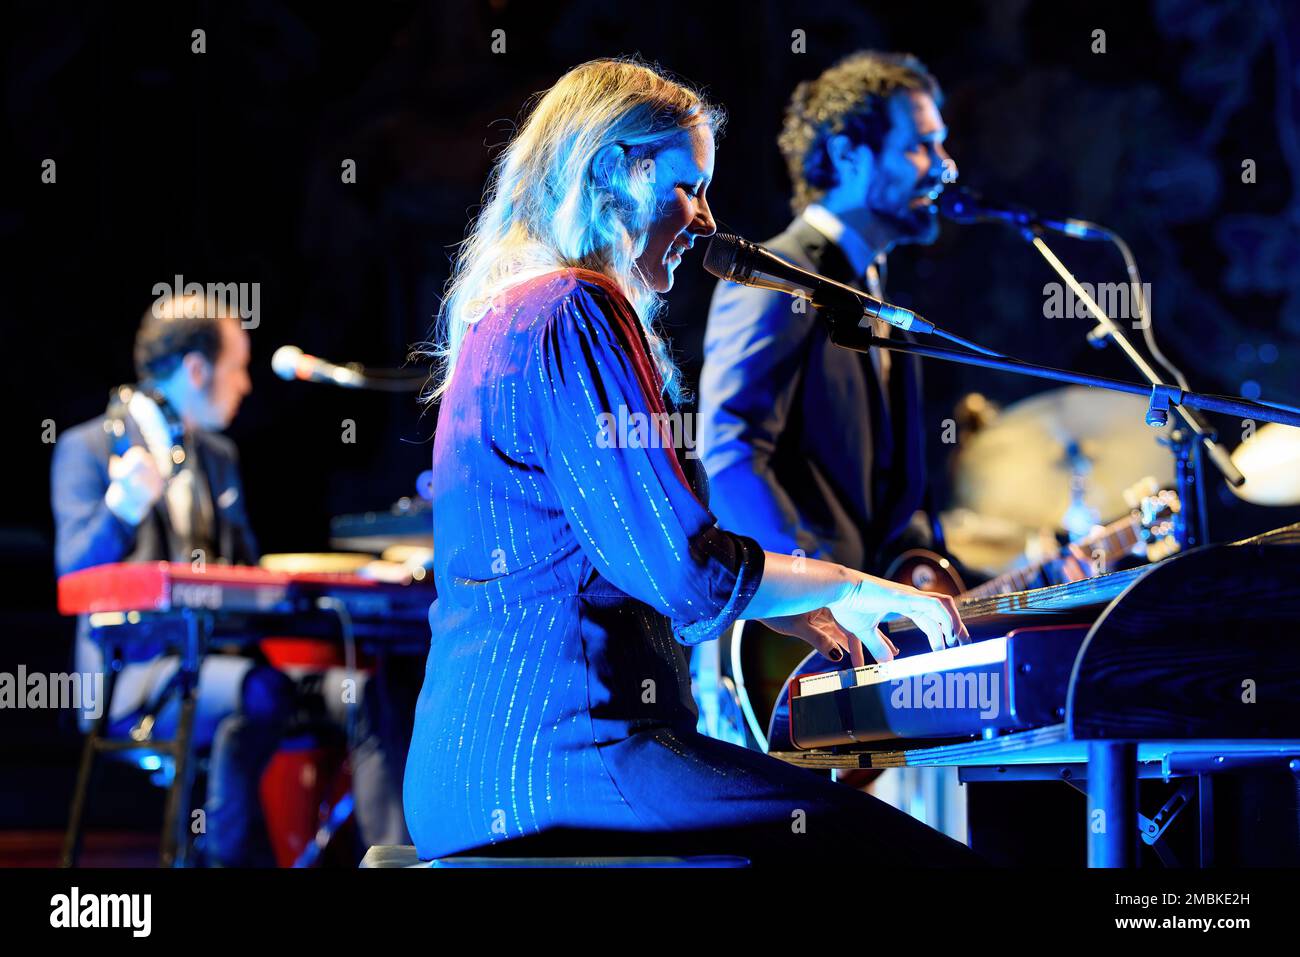 BARCELONA - FEB 4: Morgan (band) perform on stage at Palau de la Musica Catalana on February 4, 2022 in Barcelona, Spain. Stock Photo